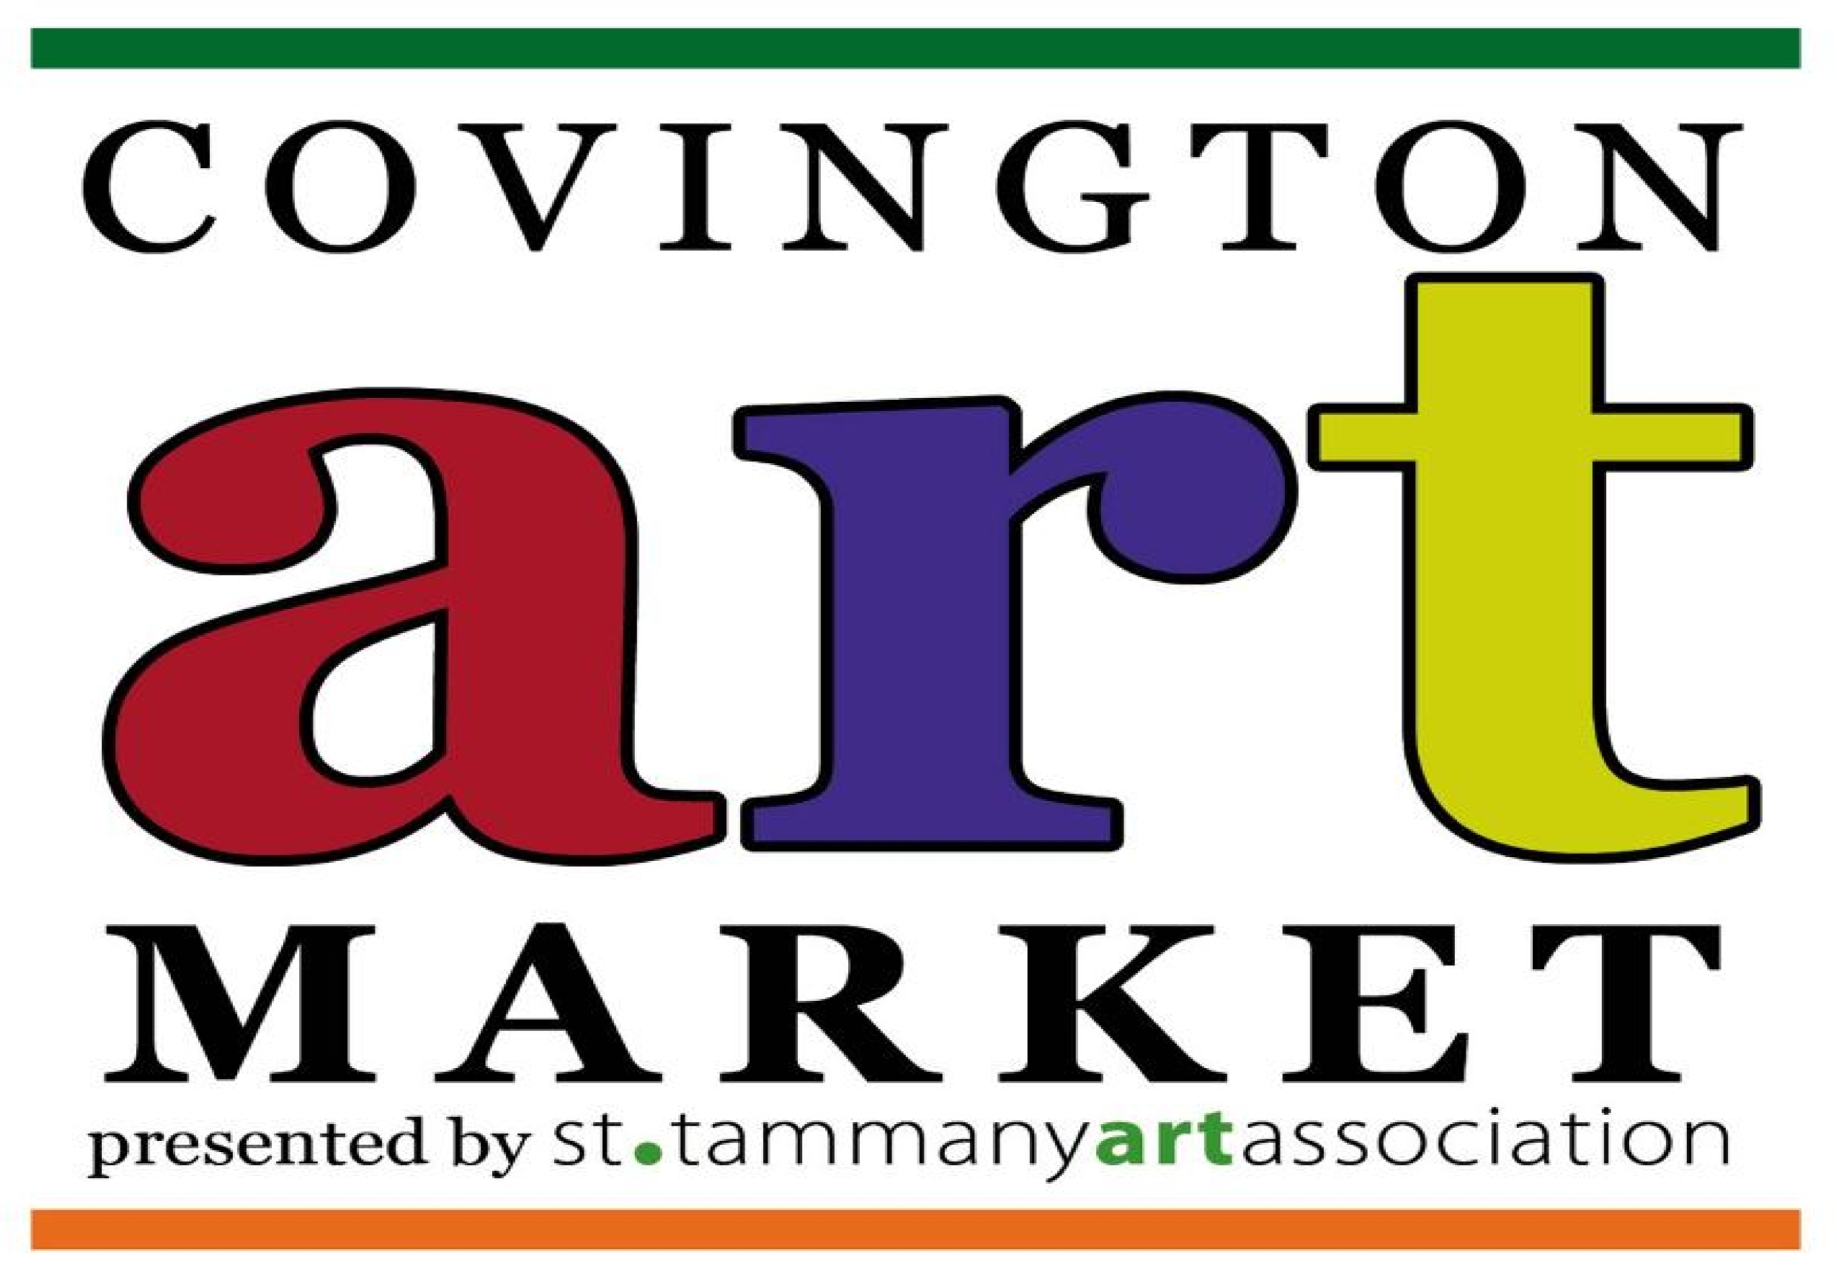 Last Covington Art Market of the Spring Season This Saturday